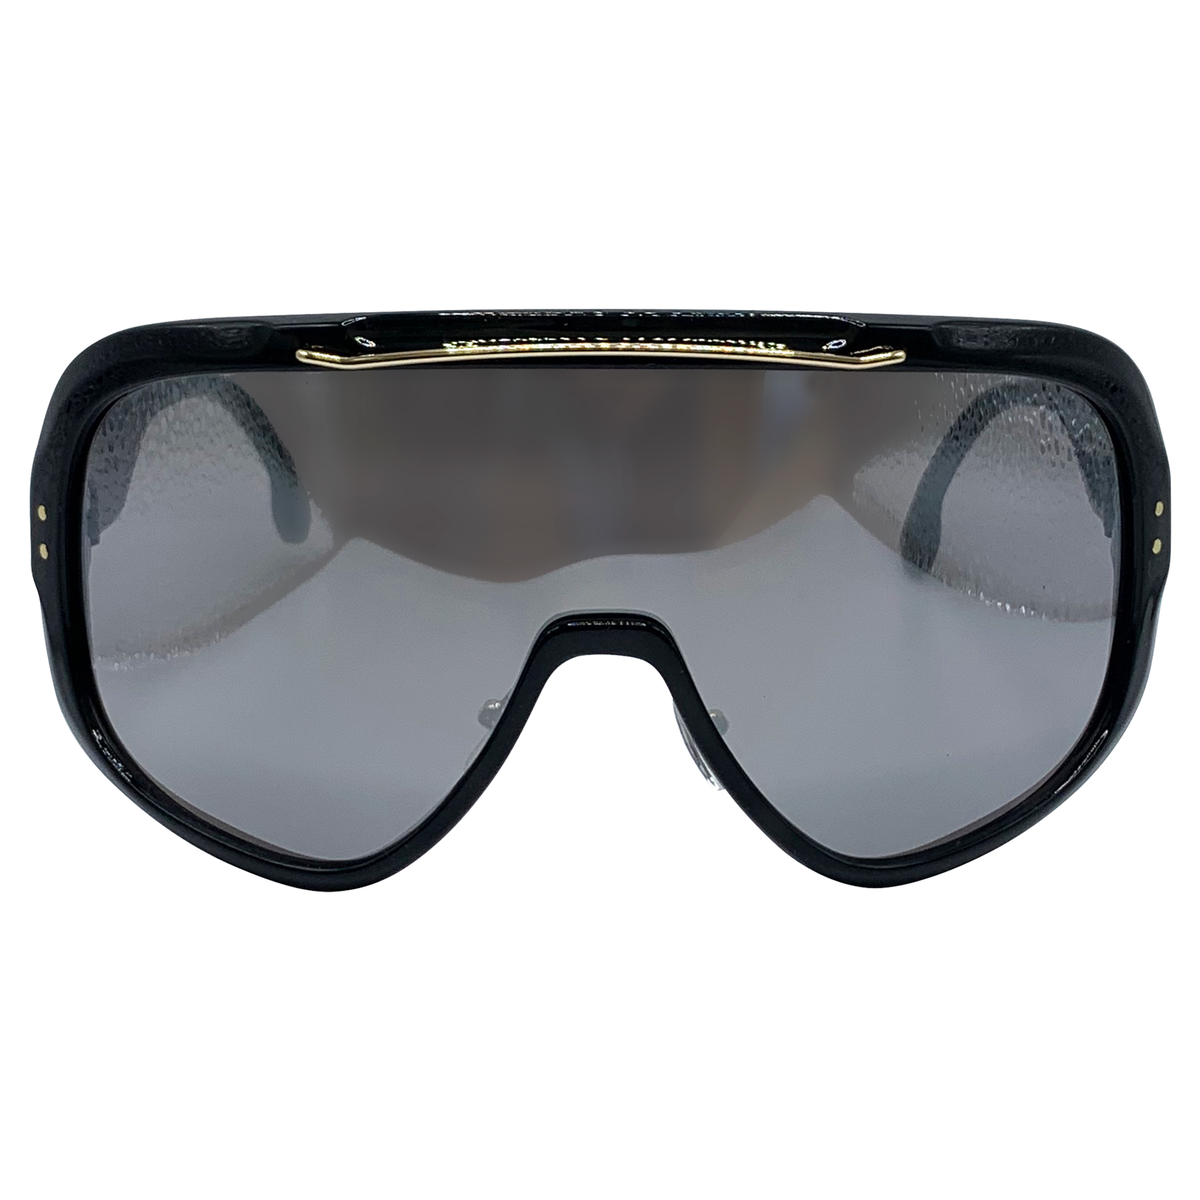 Shop AVALANCHE Retro-Style Ski Shield Vintage-Inspired Sunglasses